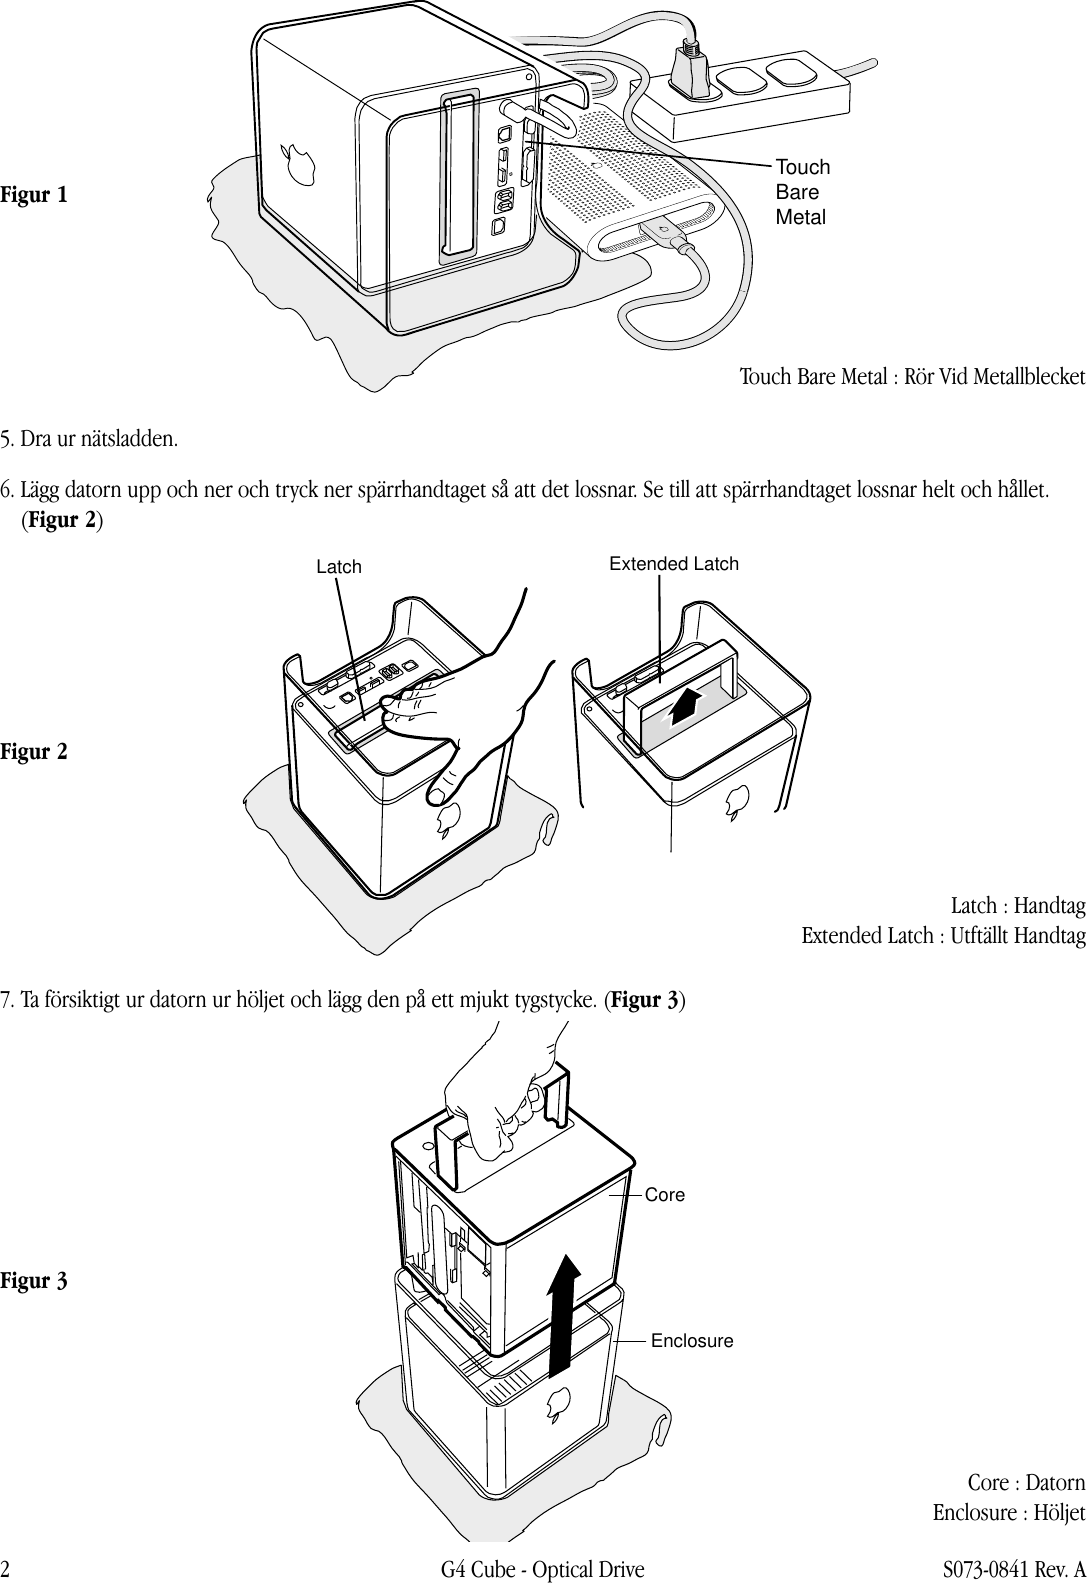 Page 2 of 12 - Apple Power Mac G4 (Cube) Optical Drive User Manual - Optisk Enhet Instruktioner För Byte 073-0841-a